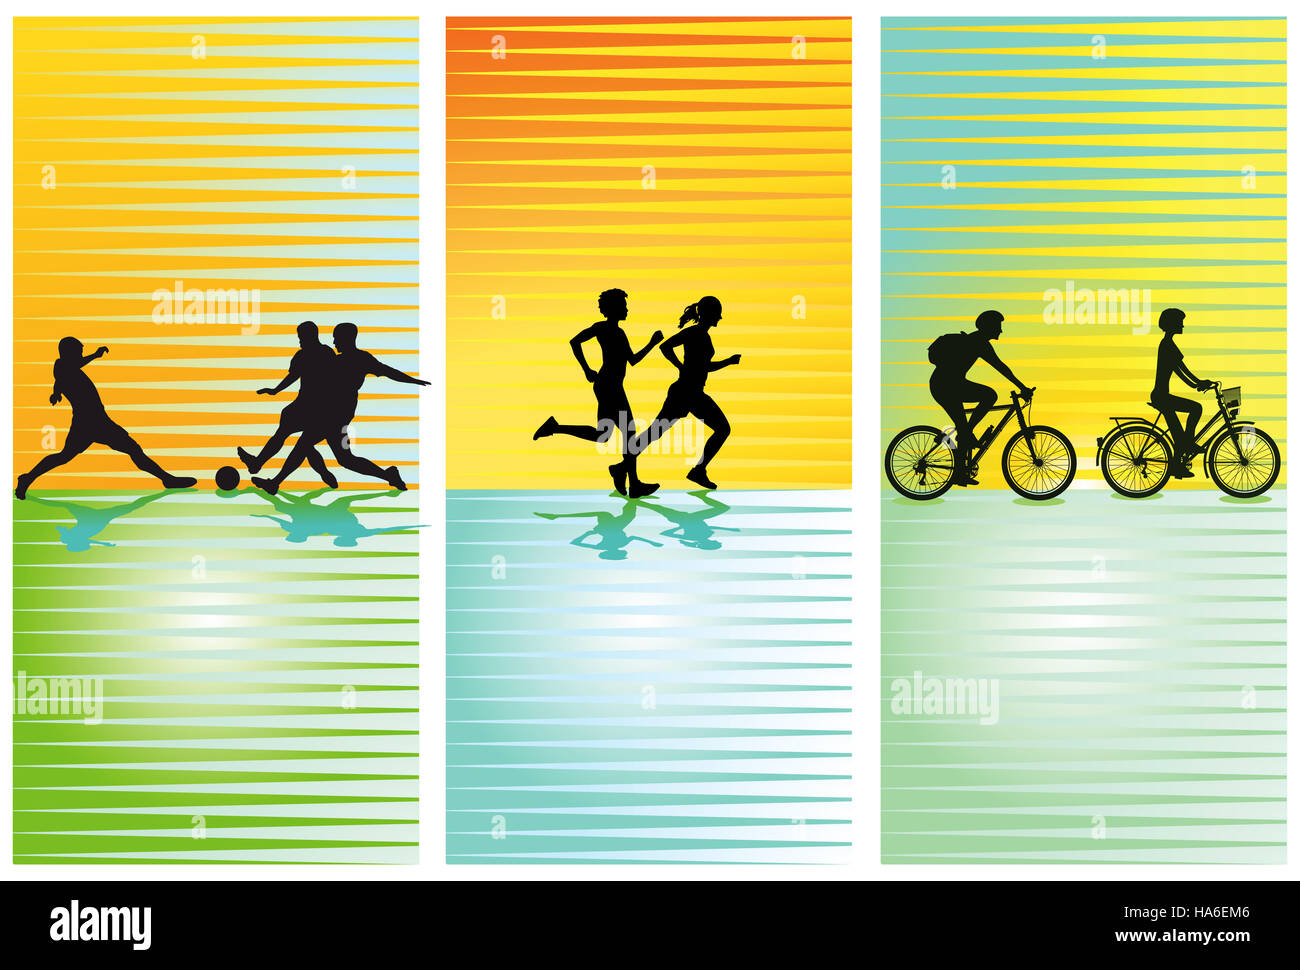 Sports, football, running, cycling Stock Photo